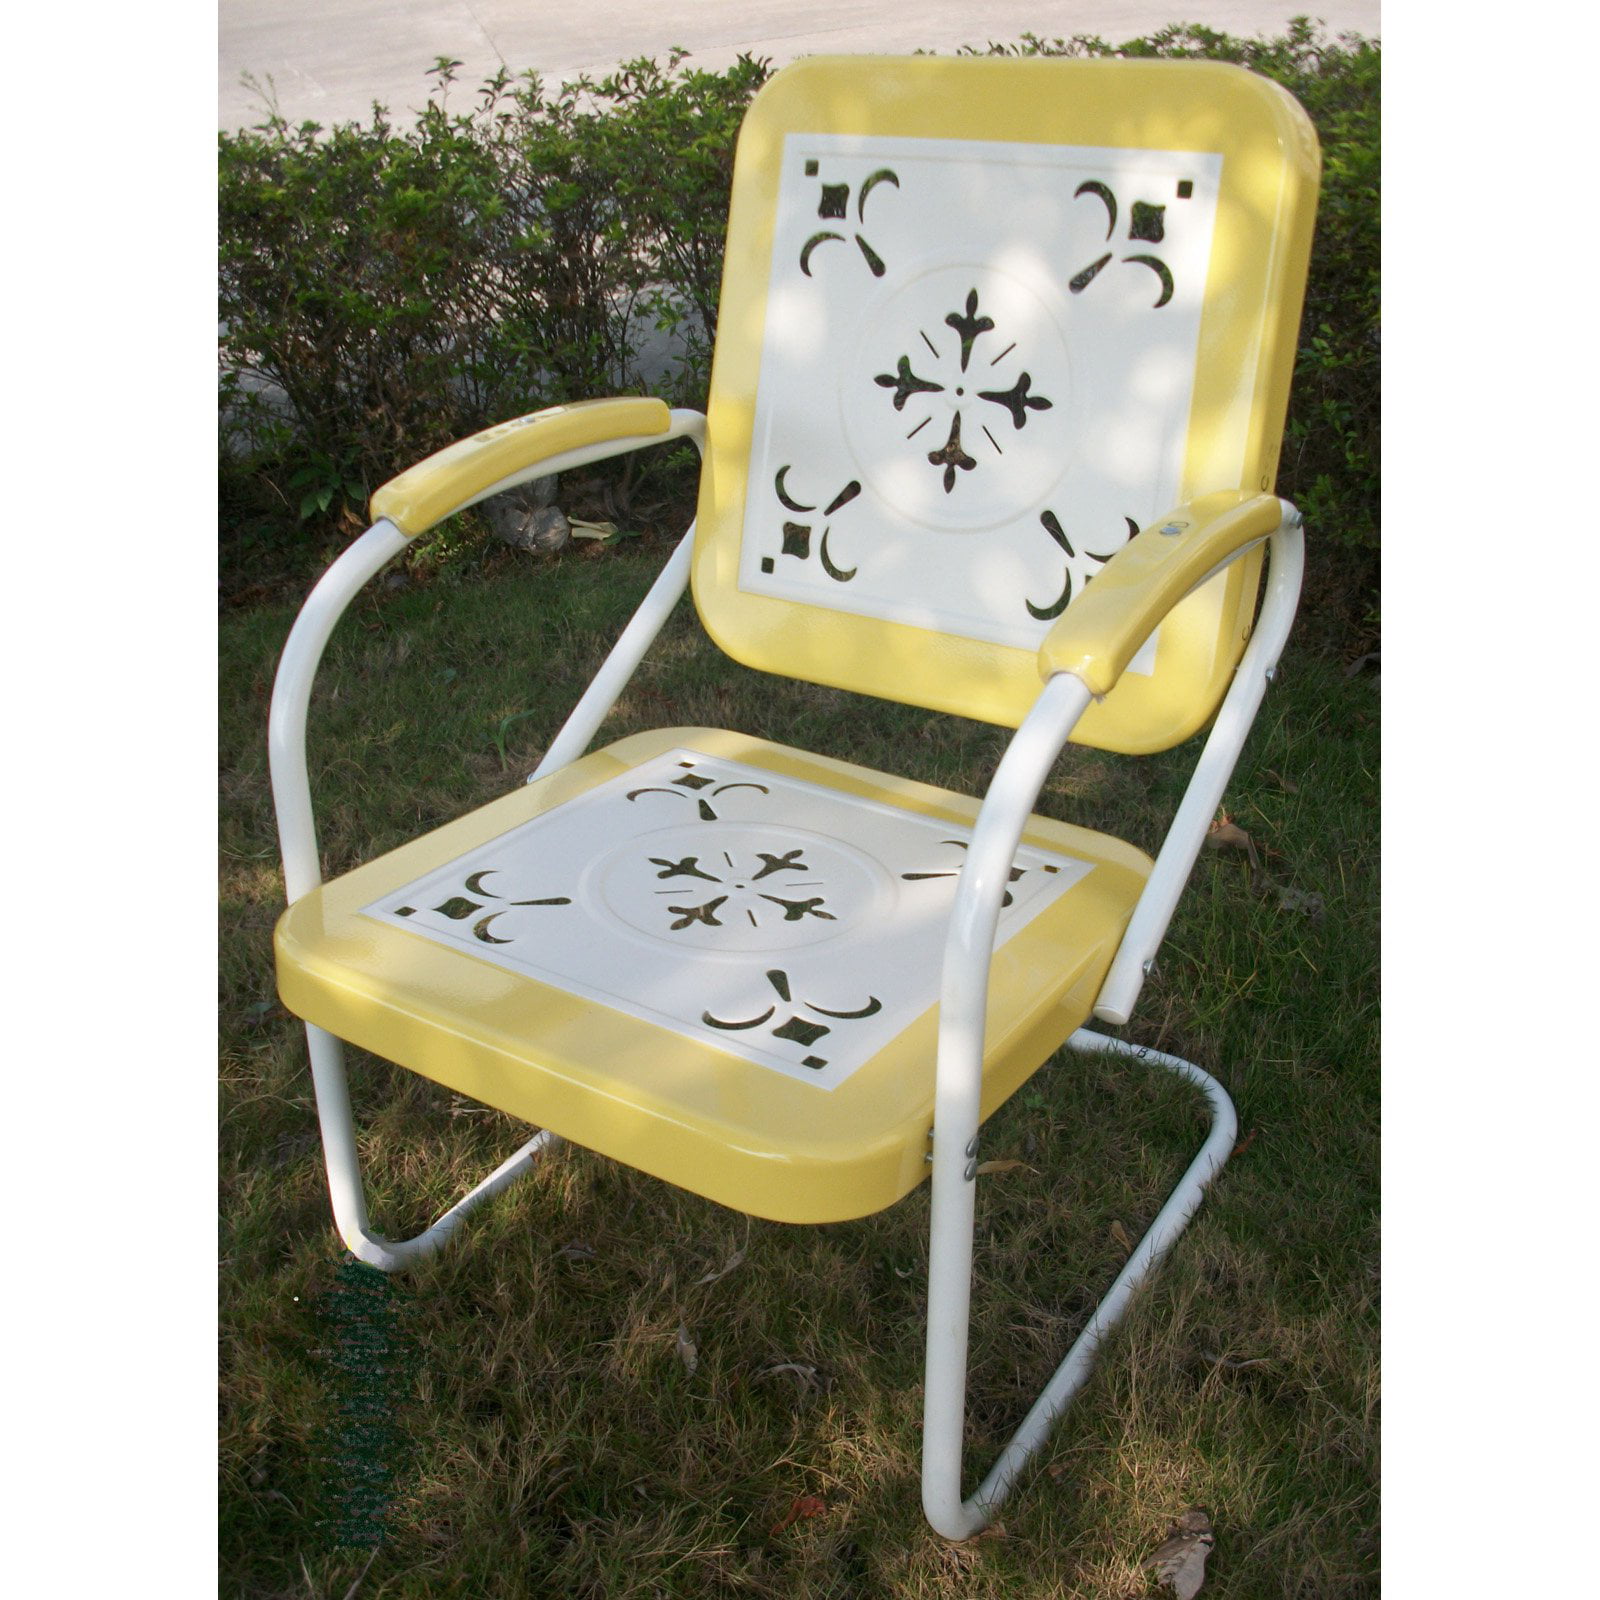 Retro Outdoor Chair Multiple Colors Walmart Com Walmart Com